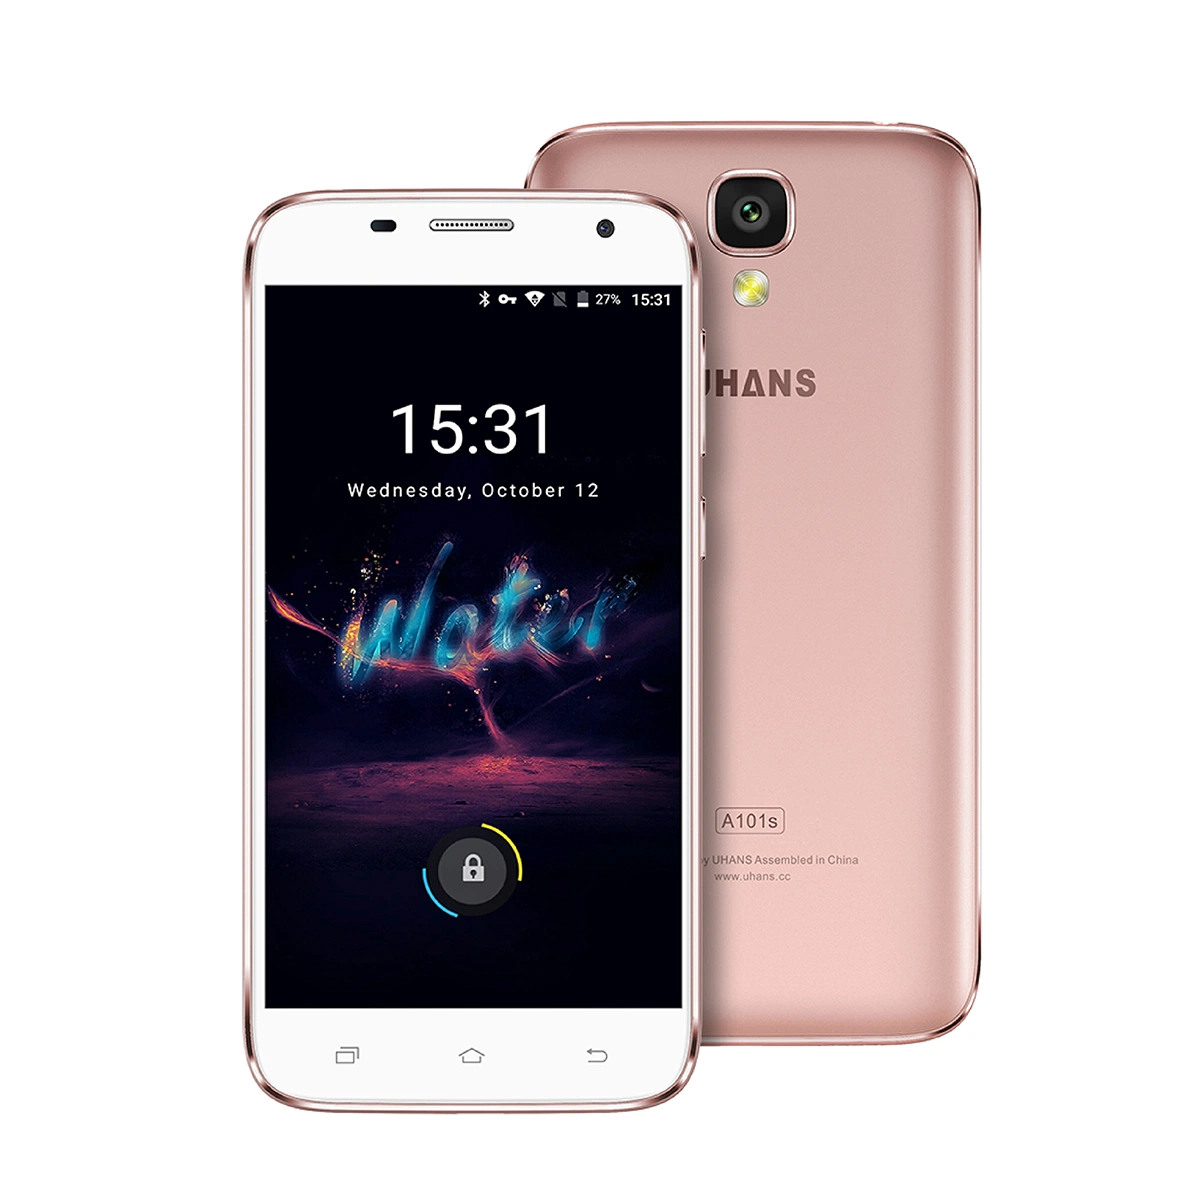 Heißer Verkauf China Original Marke Uhans A101s Smartphone